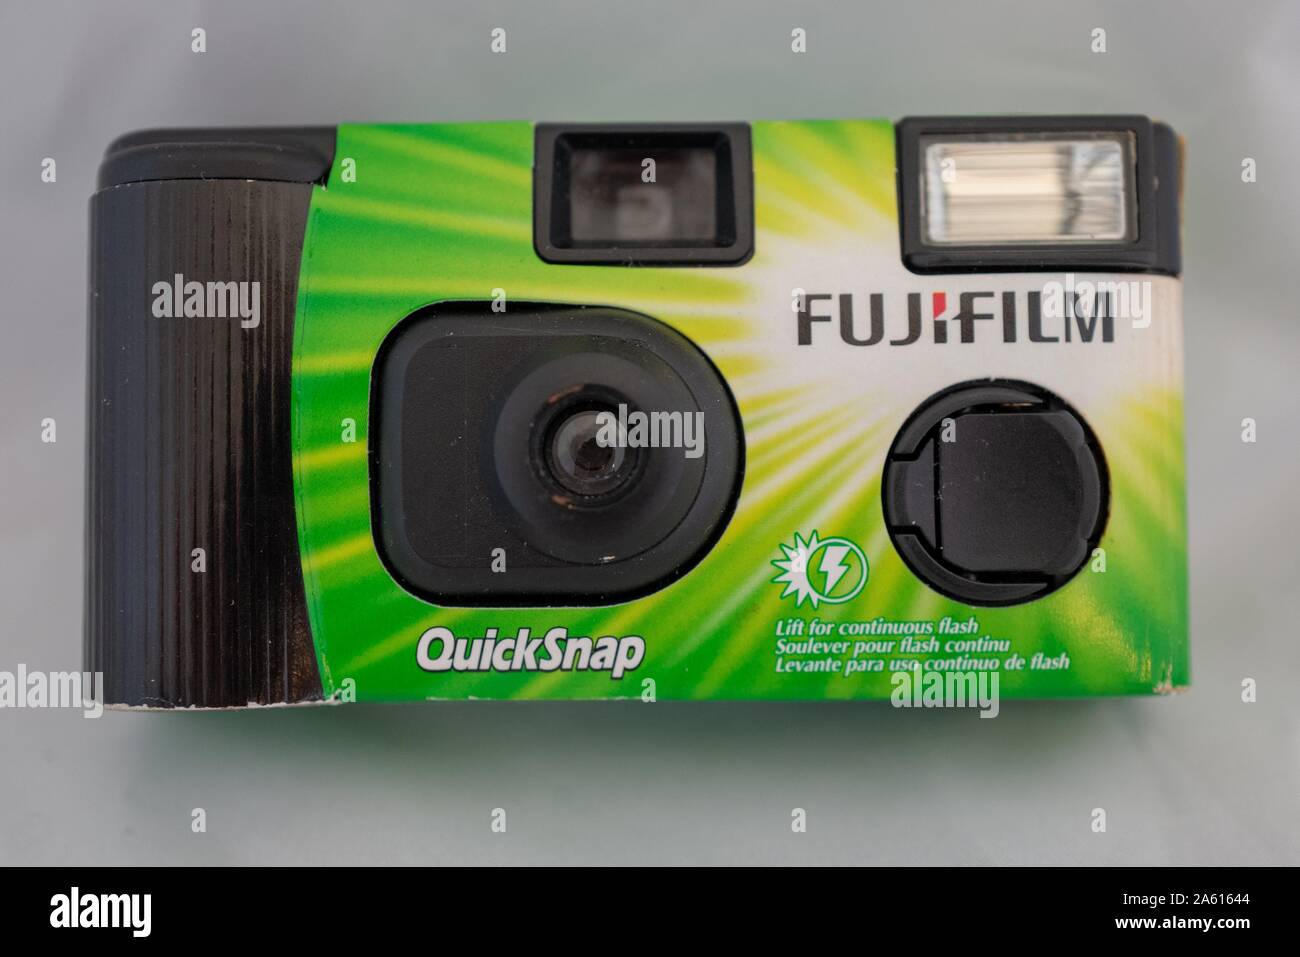 Cámara analógica desechable Fujifilm Quicksnap Flash de 35 mm